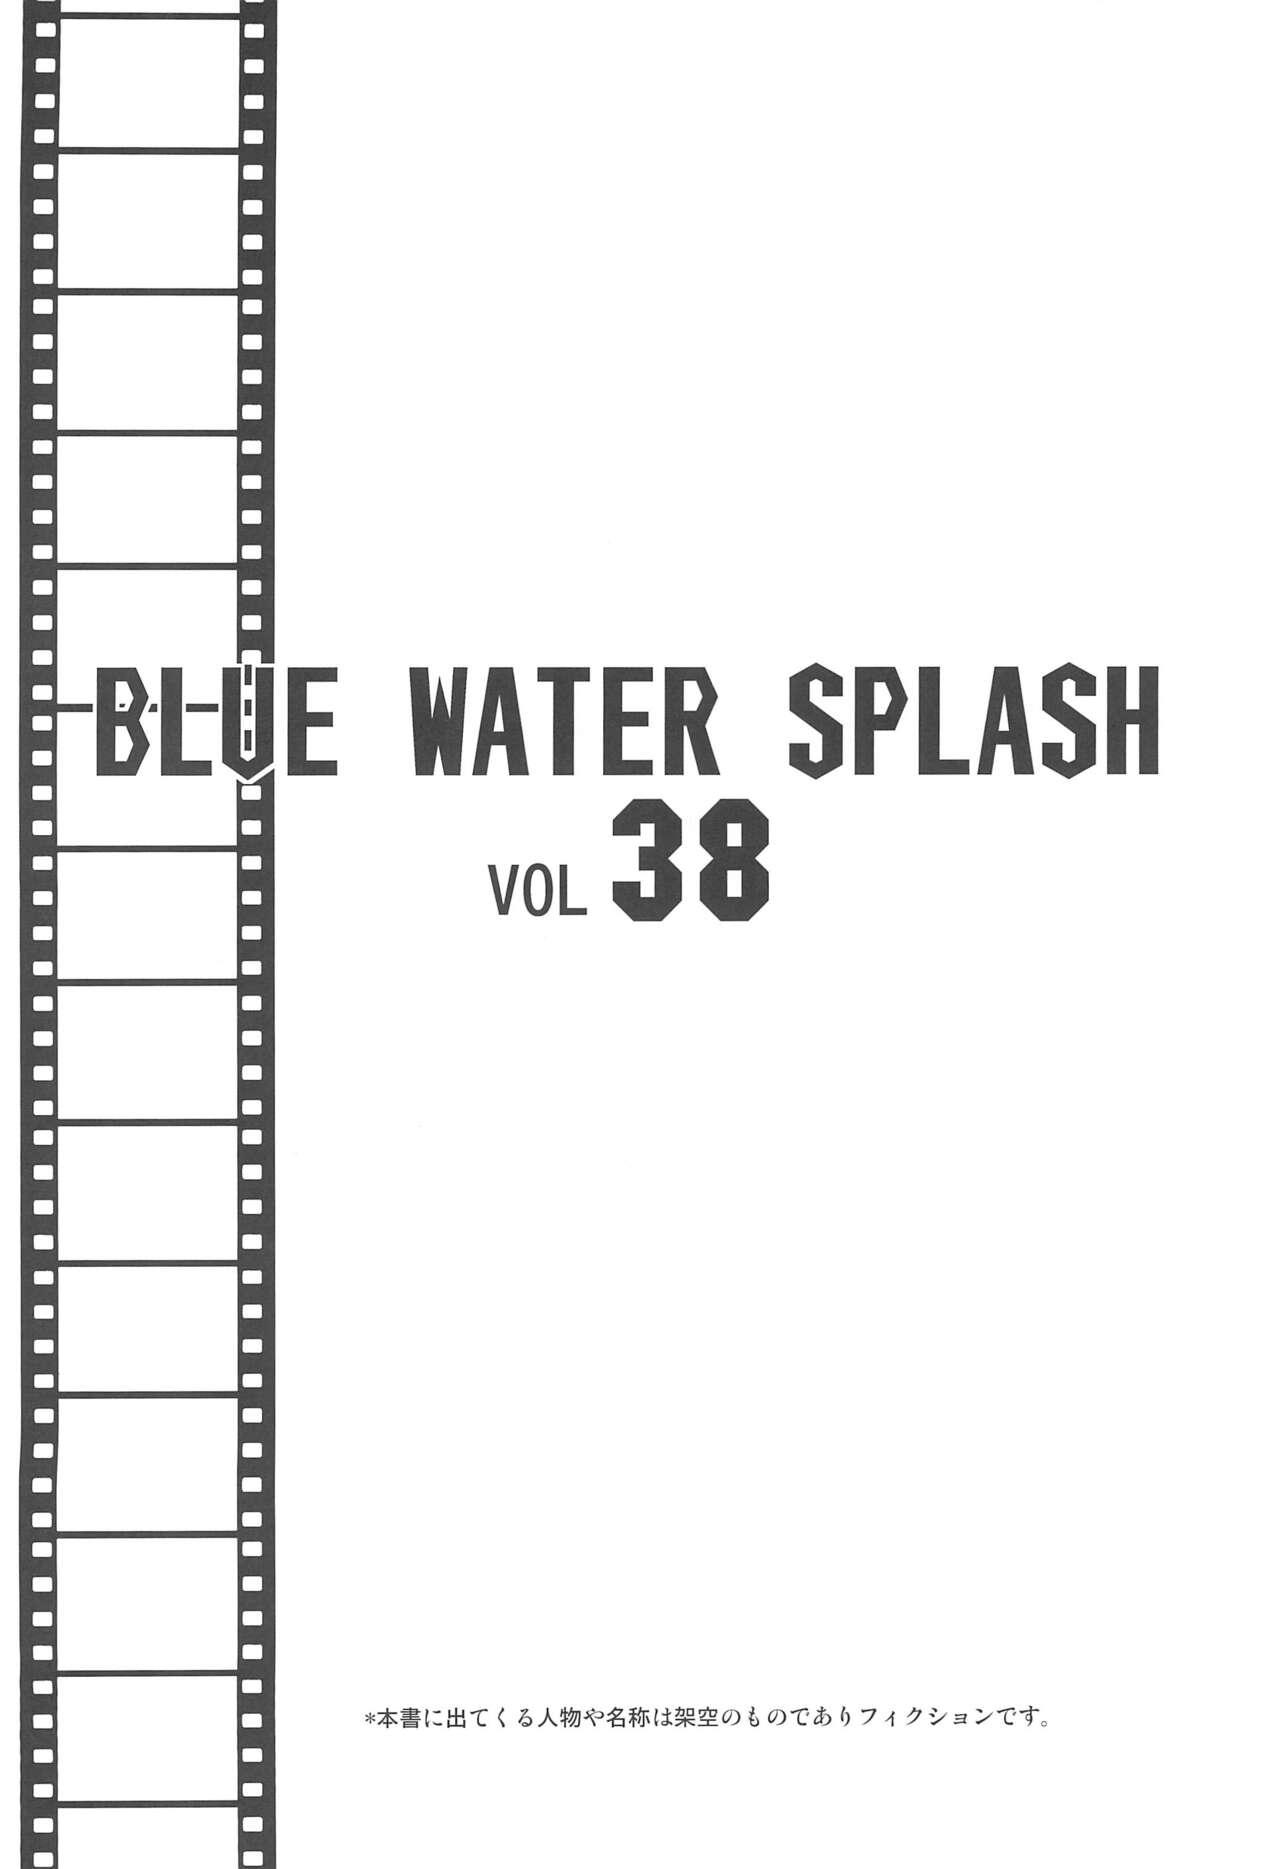 BLUE WATER SPLASH vol 38 3